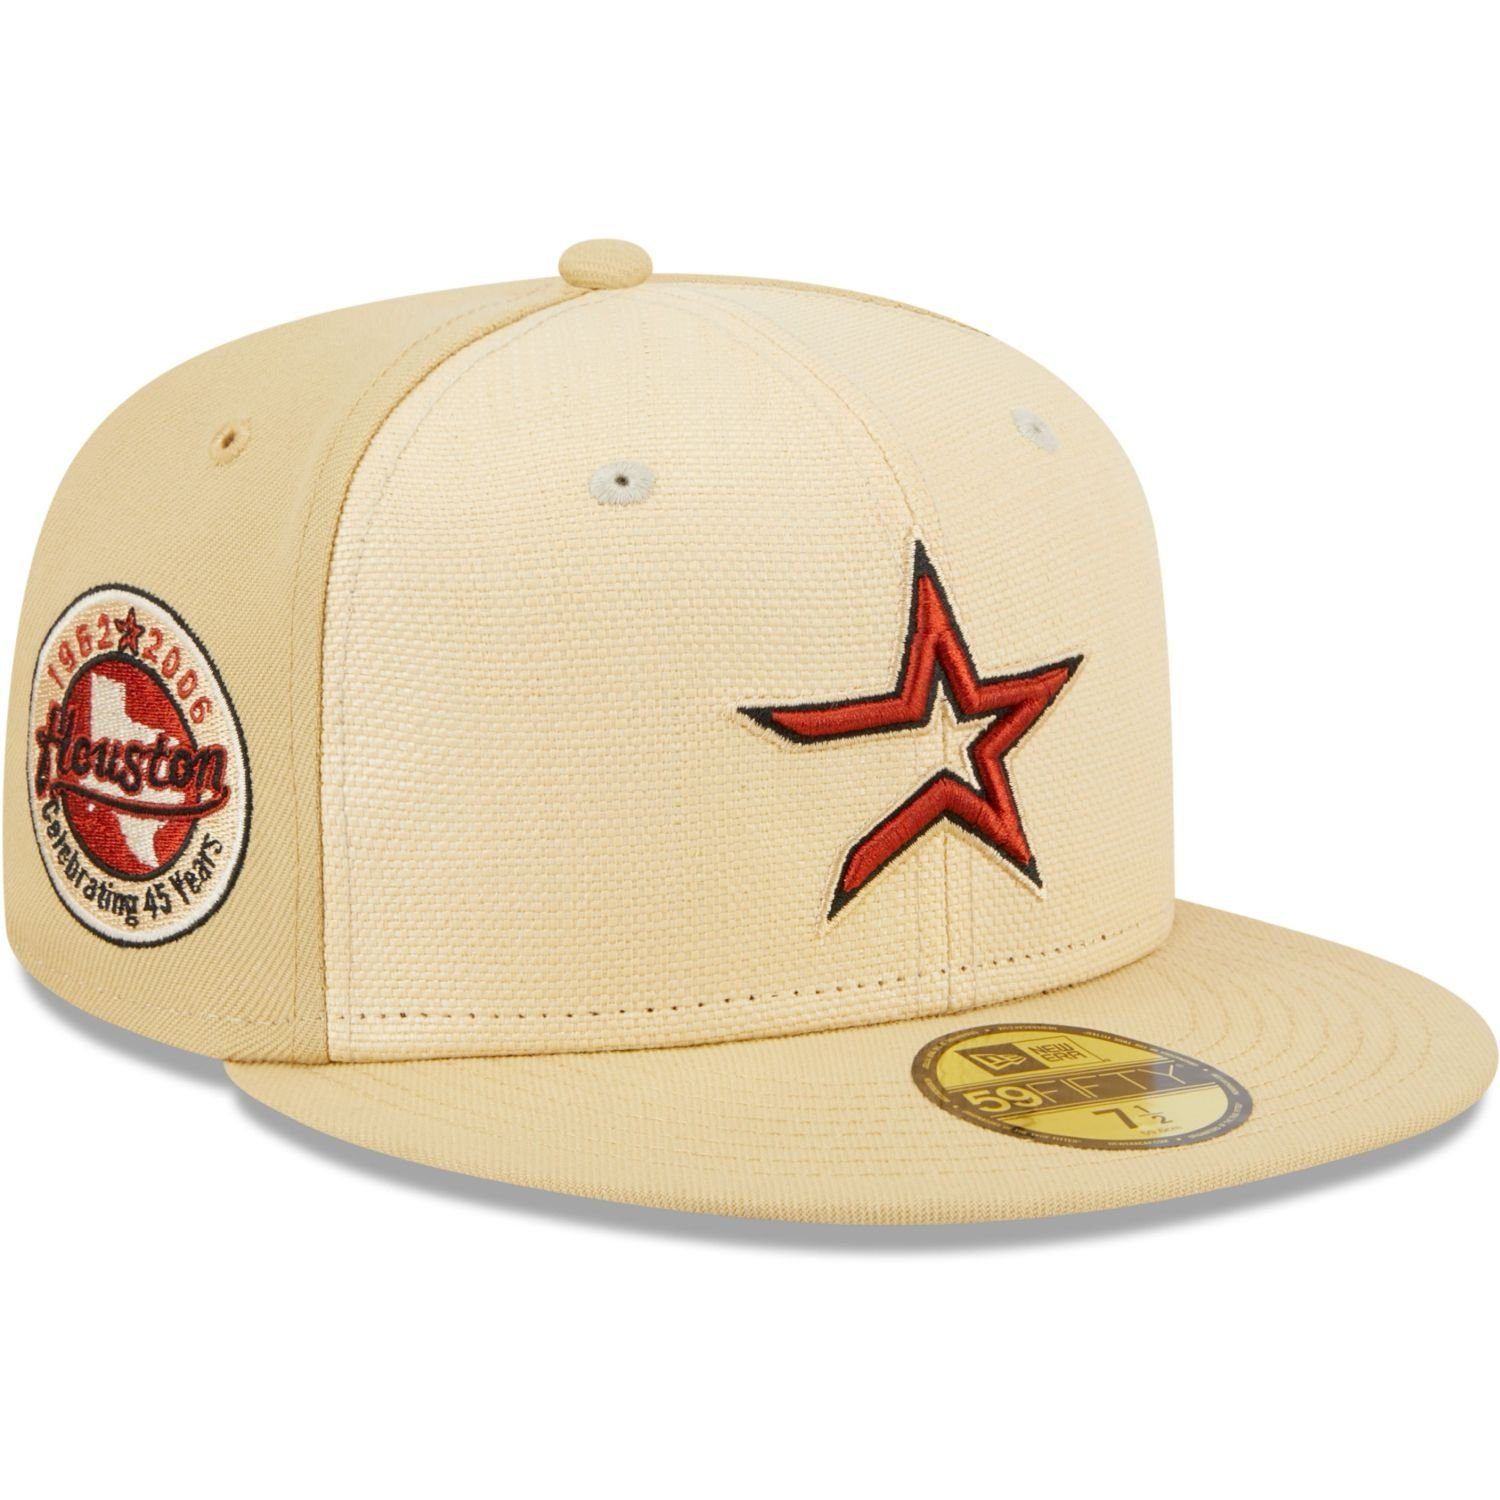 New Era Fitted Cap 59Fifty RAFFIA Houston Astros